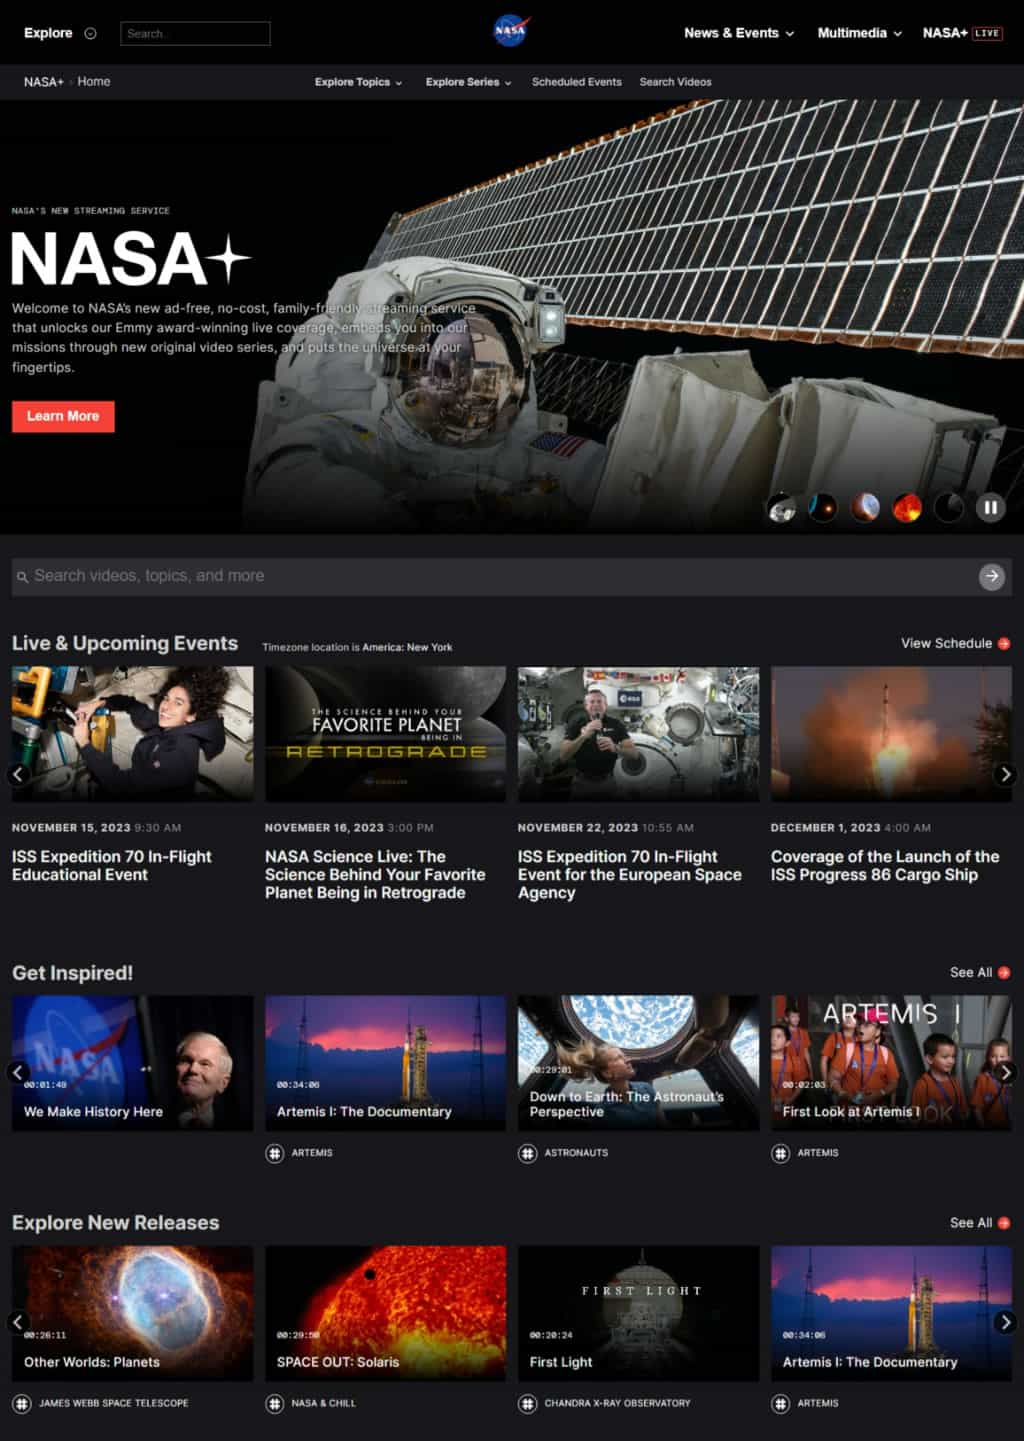 NASA+ 免費串流影音服務，提供探索宇宙相關紀錄片、直播及講座